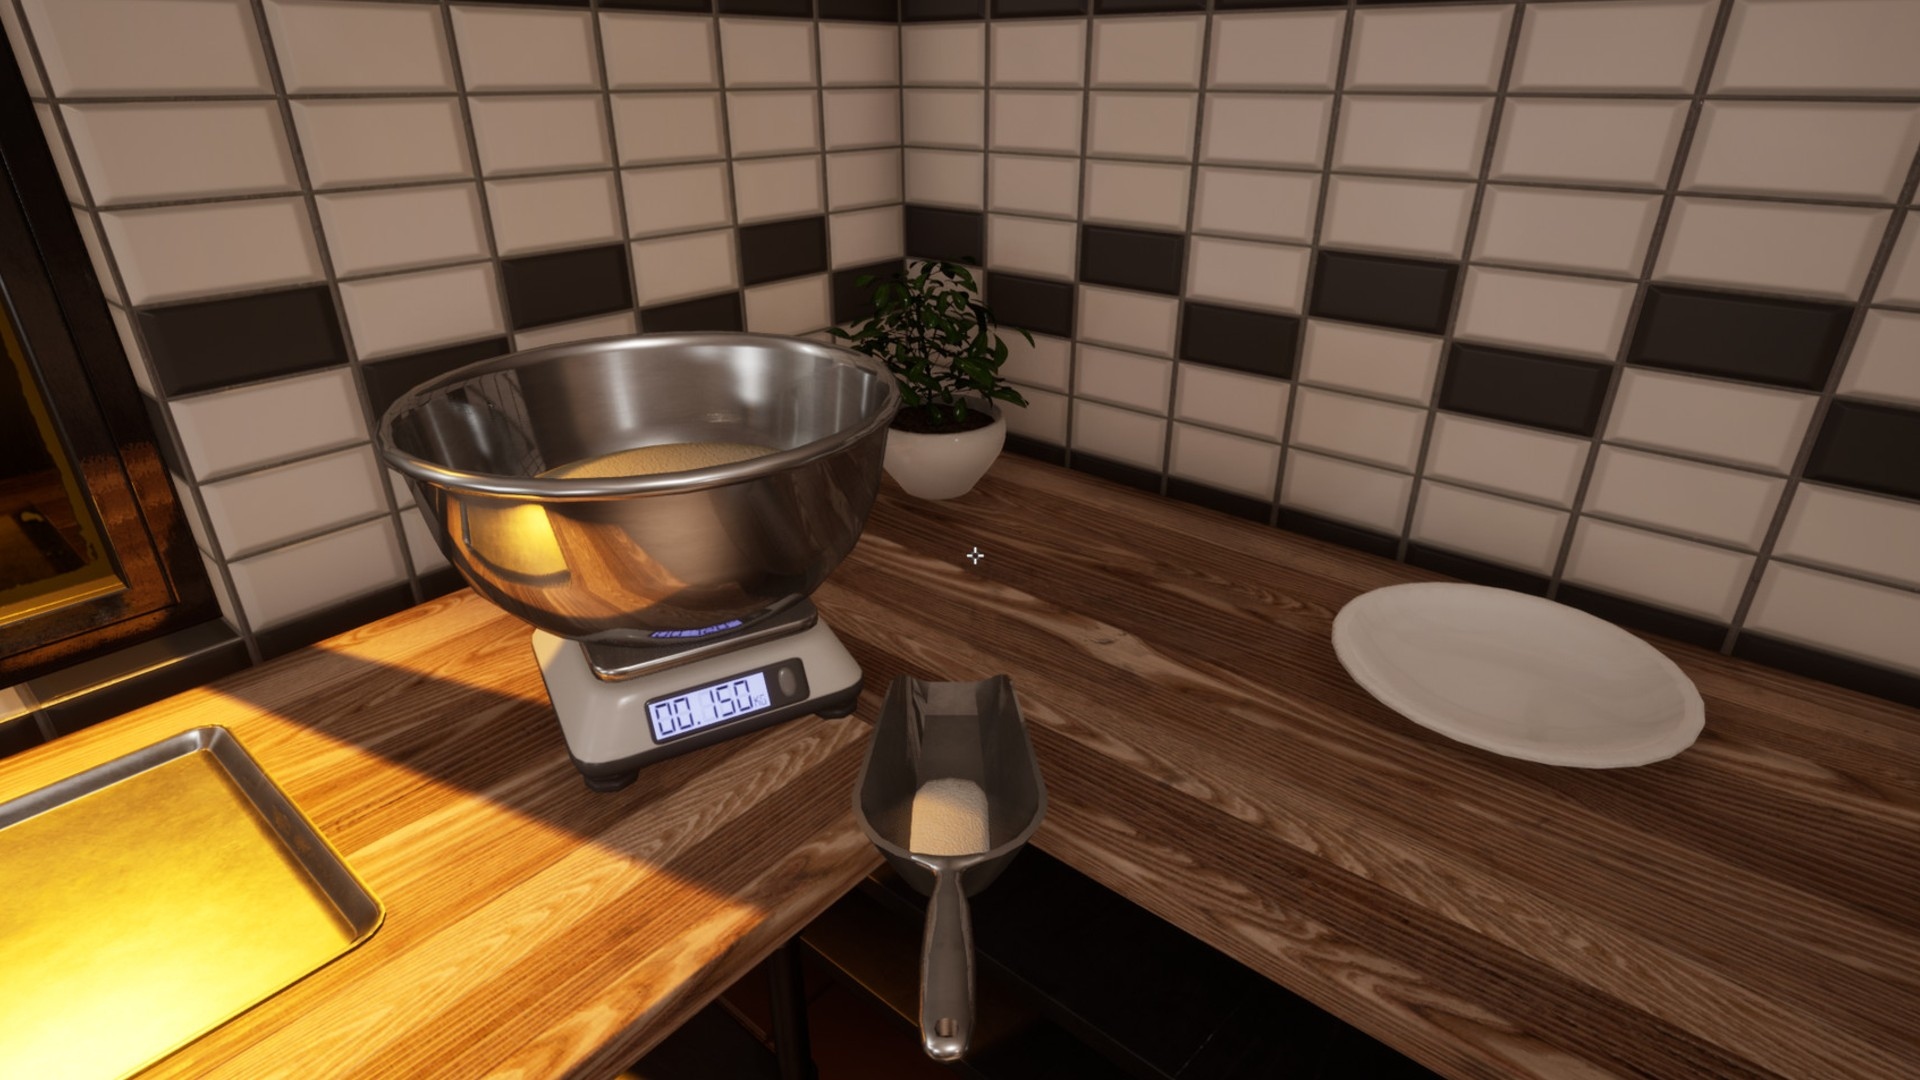 Best Cooking Games Bakery Simulator 